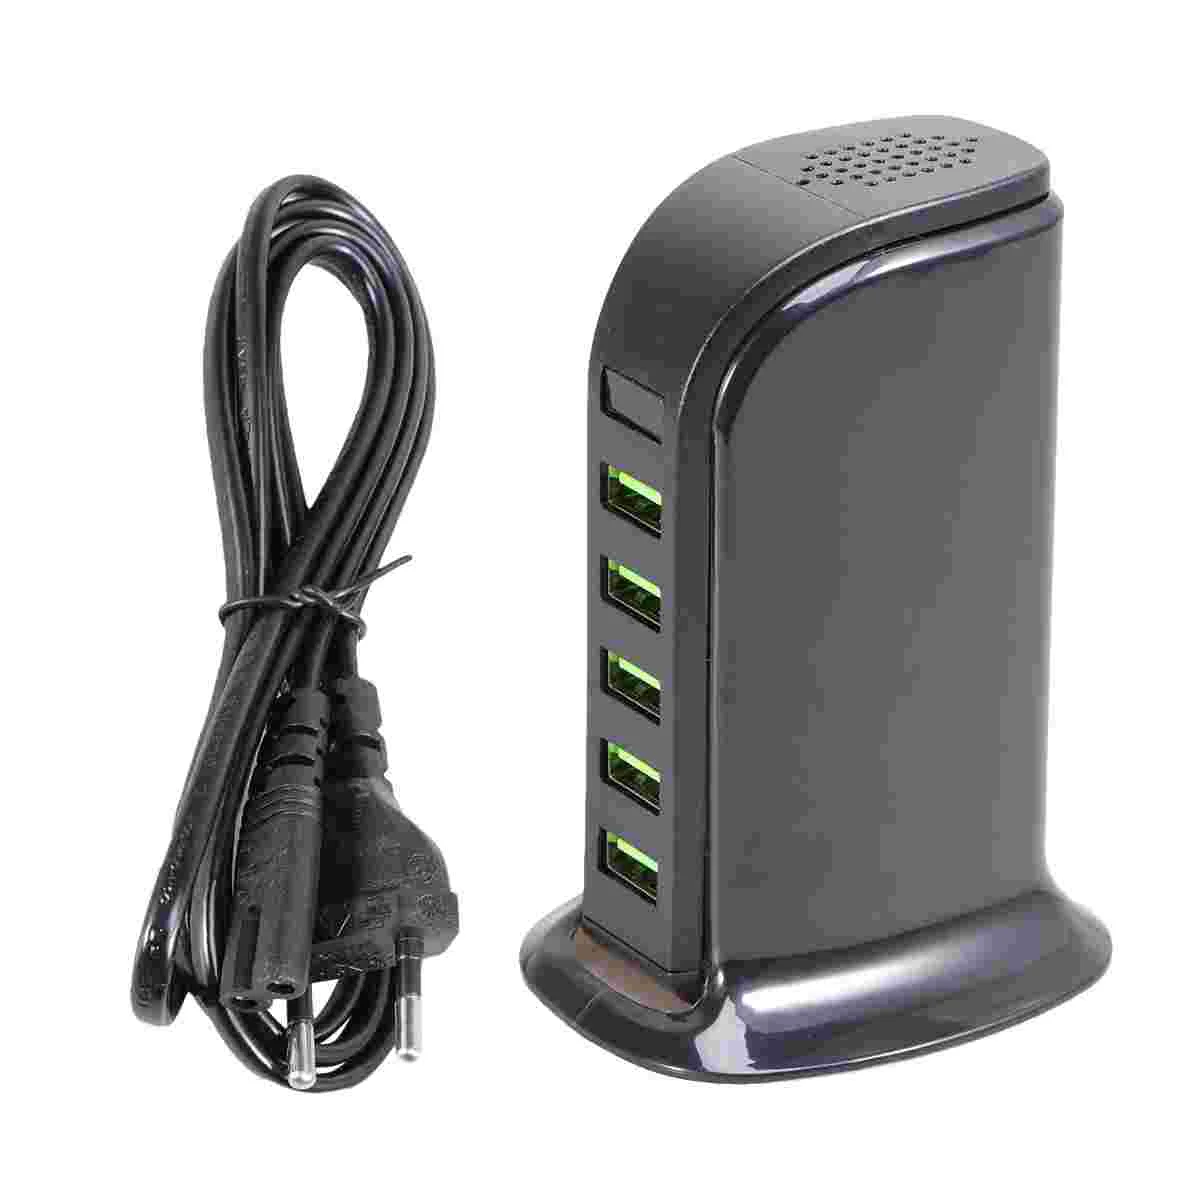 

1PC 5 Ports USB Travel Wall 5V/4A Multi Ports Adapter Smart Digital Display with EU Plug (Black Red Screen